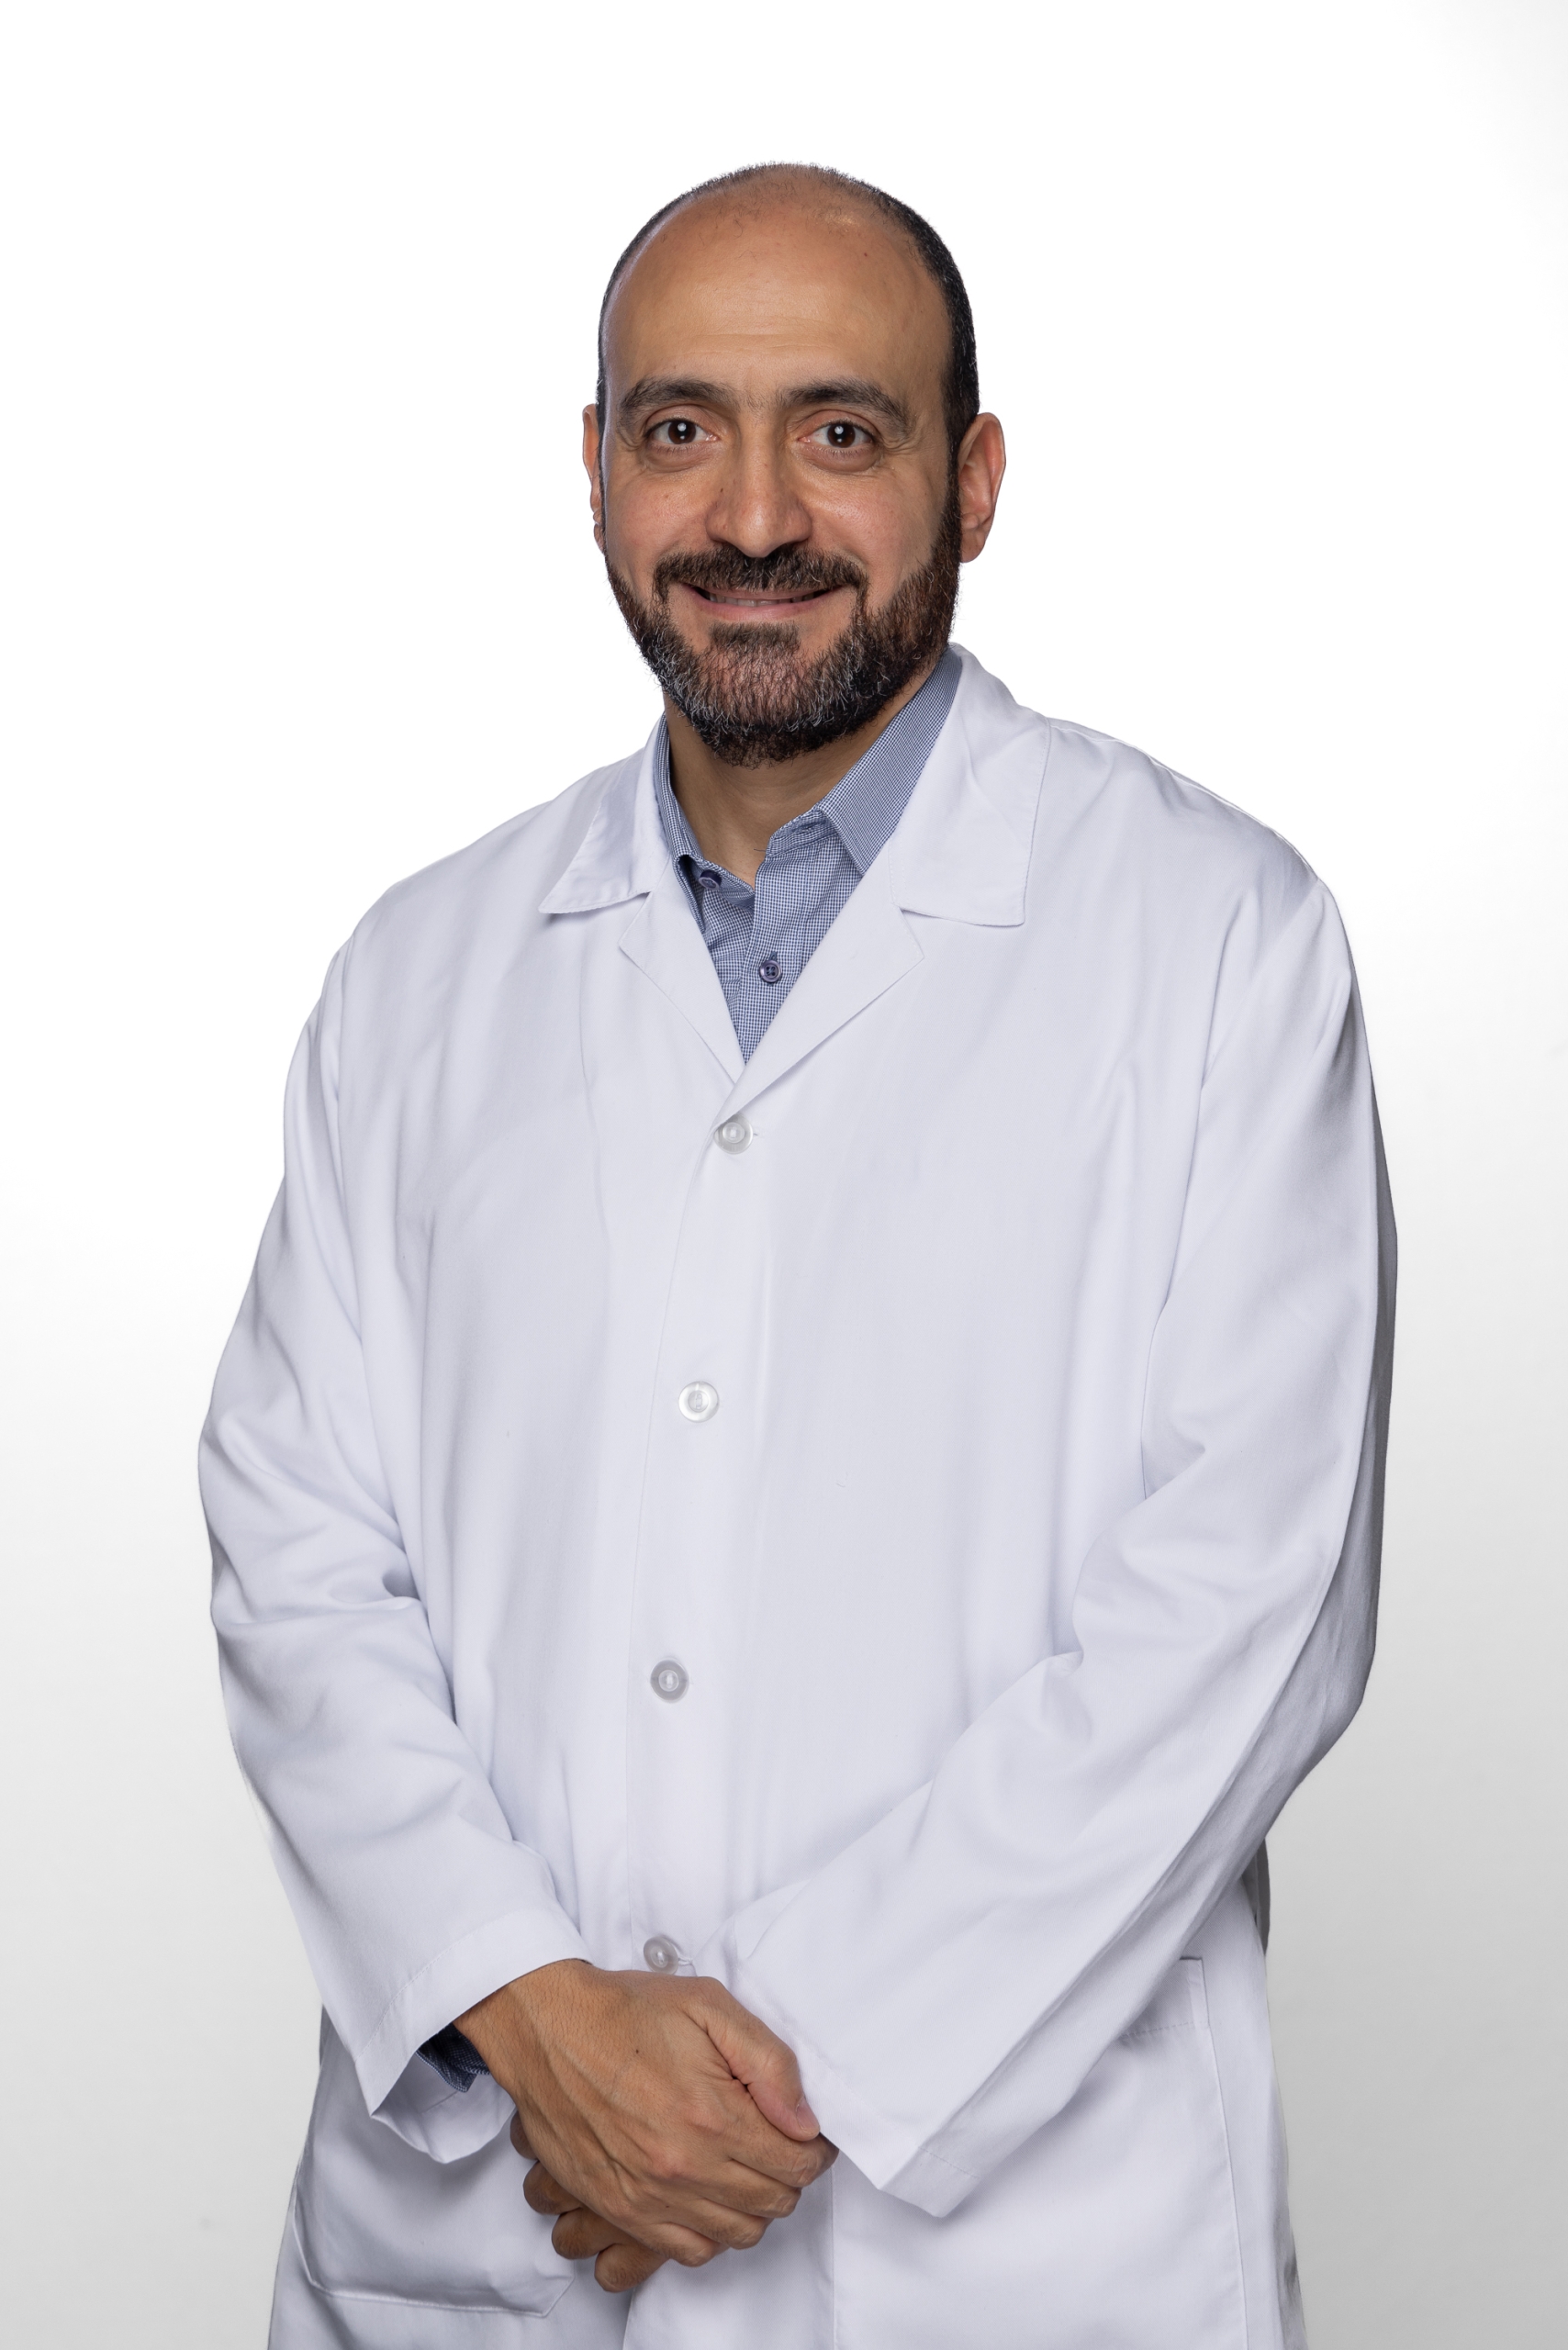 Dr. Ahmed Maher Ibrahim Hashey